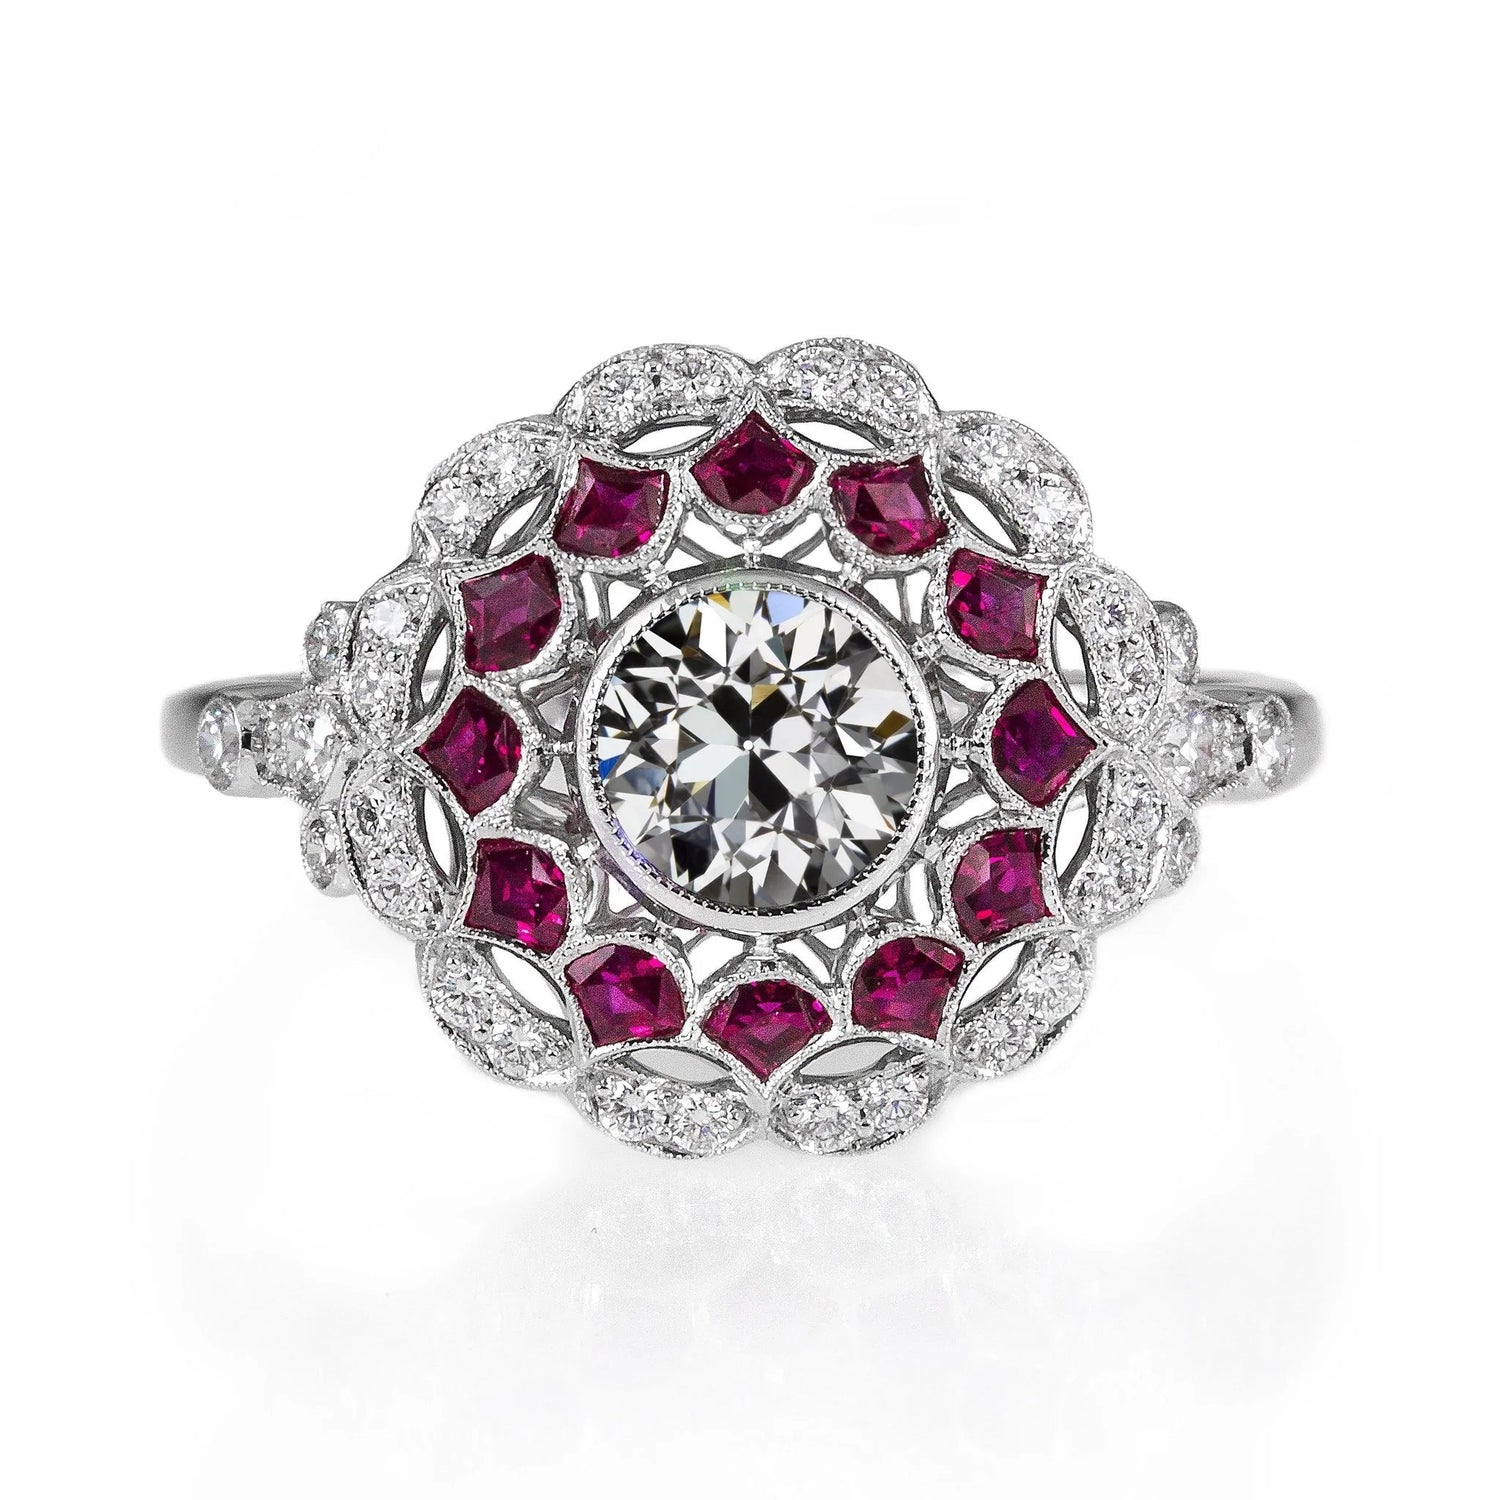 Bijoux Art Déco New Halo Ring Old Cut Réel Diamond Ruby Flower Style Special Cut